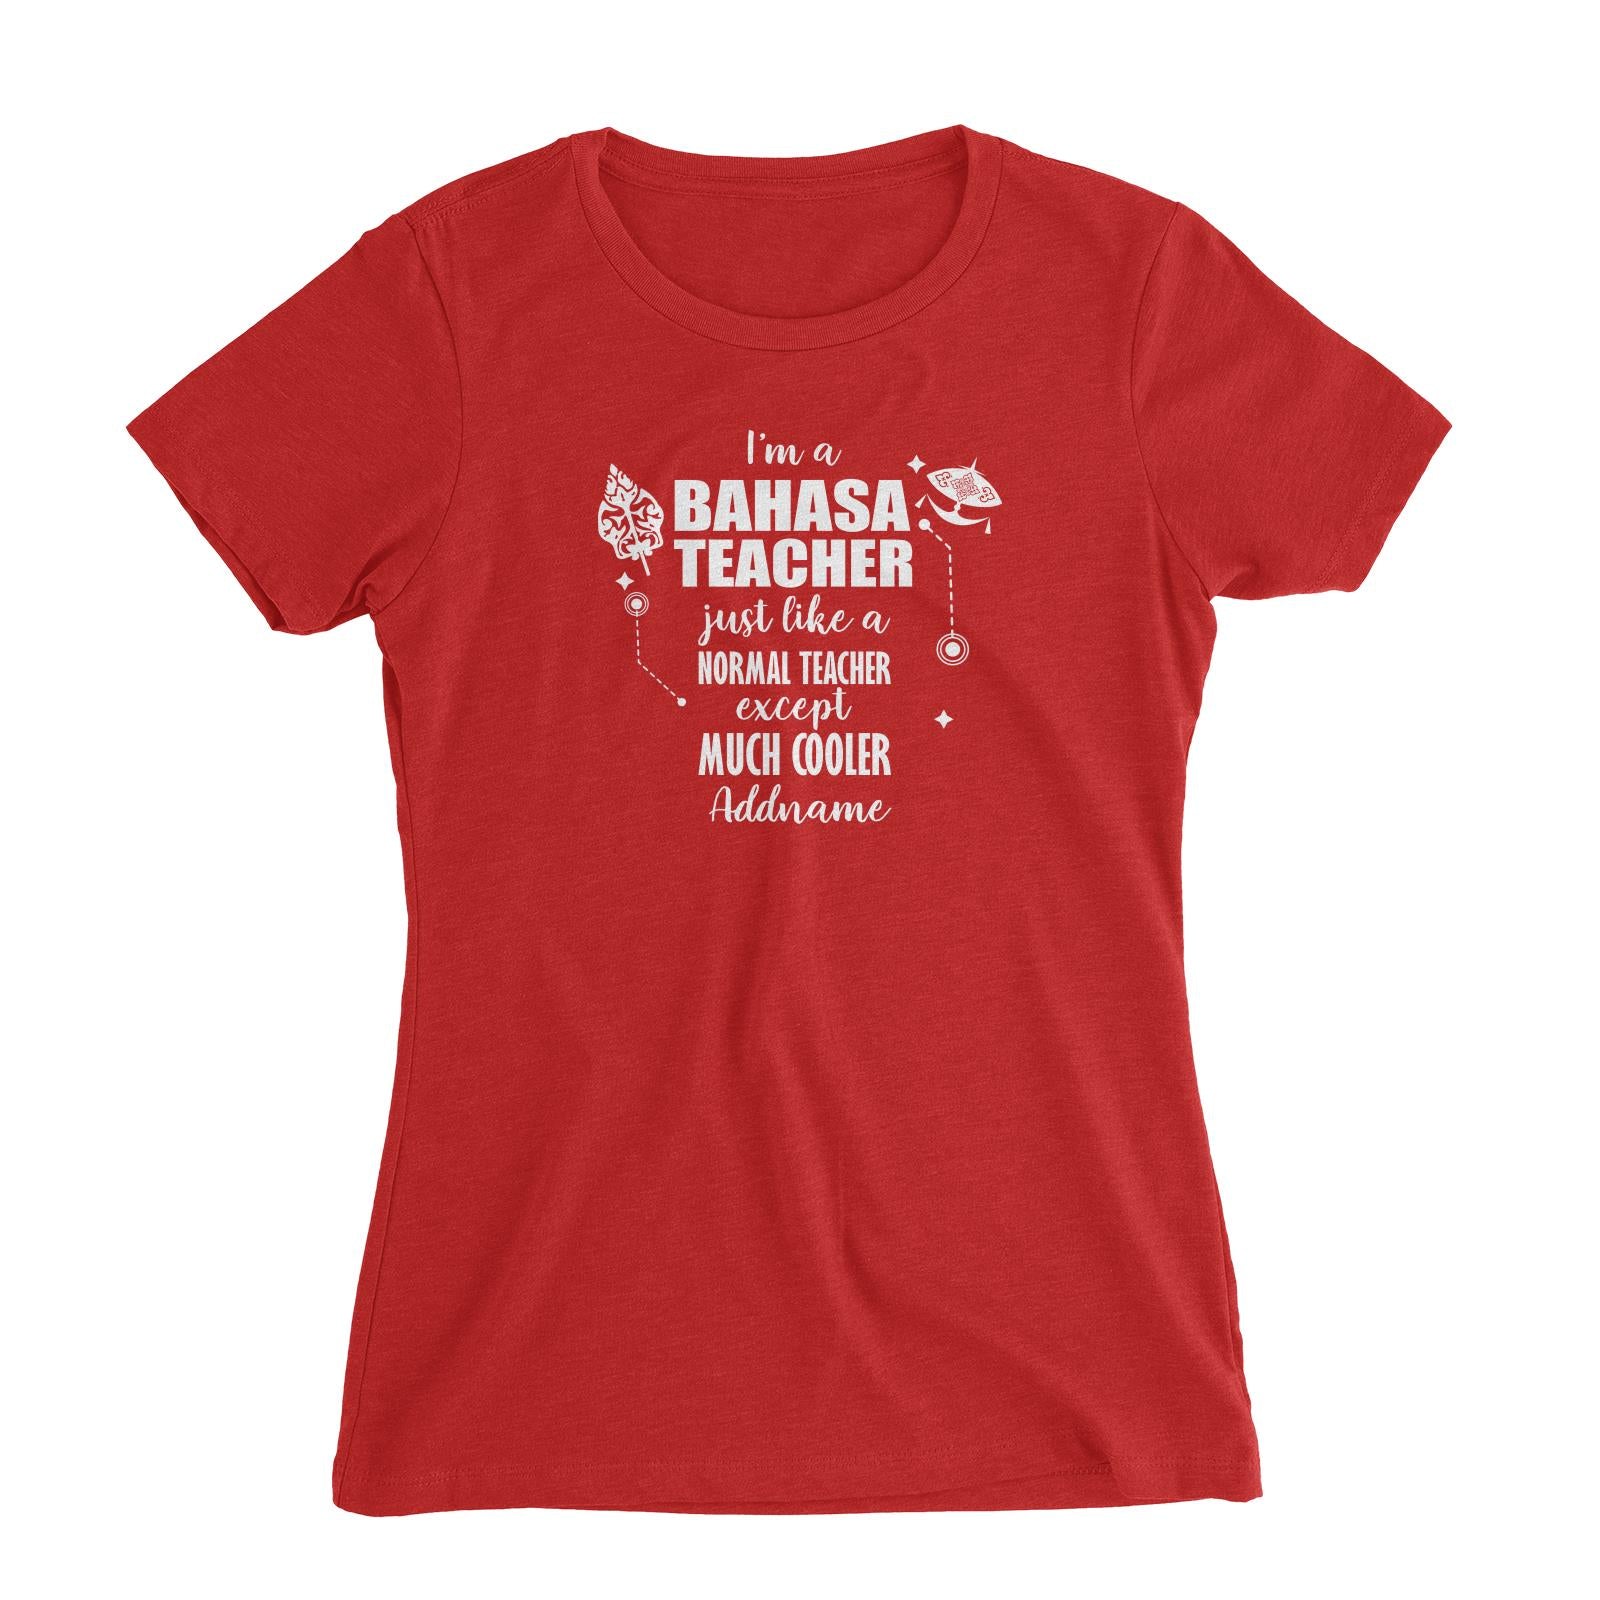 Subject Teachers 3 I'm A Bahasa Teacher Addname Women's Slim Fit T-Shirt